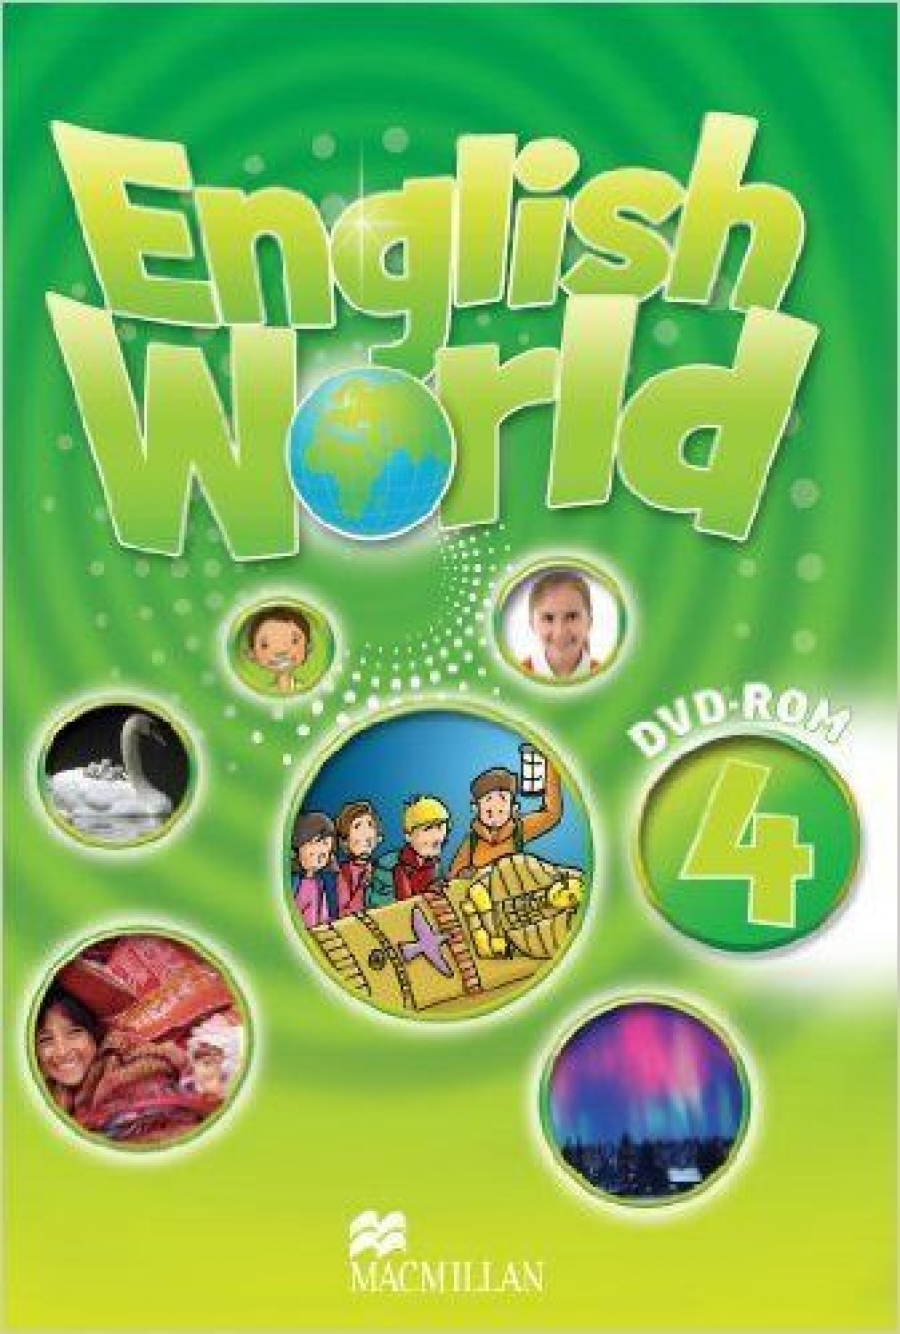 Liz Hocking and Mary Bowen English World 4 DVD-ROM 